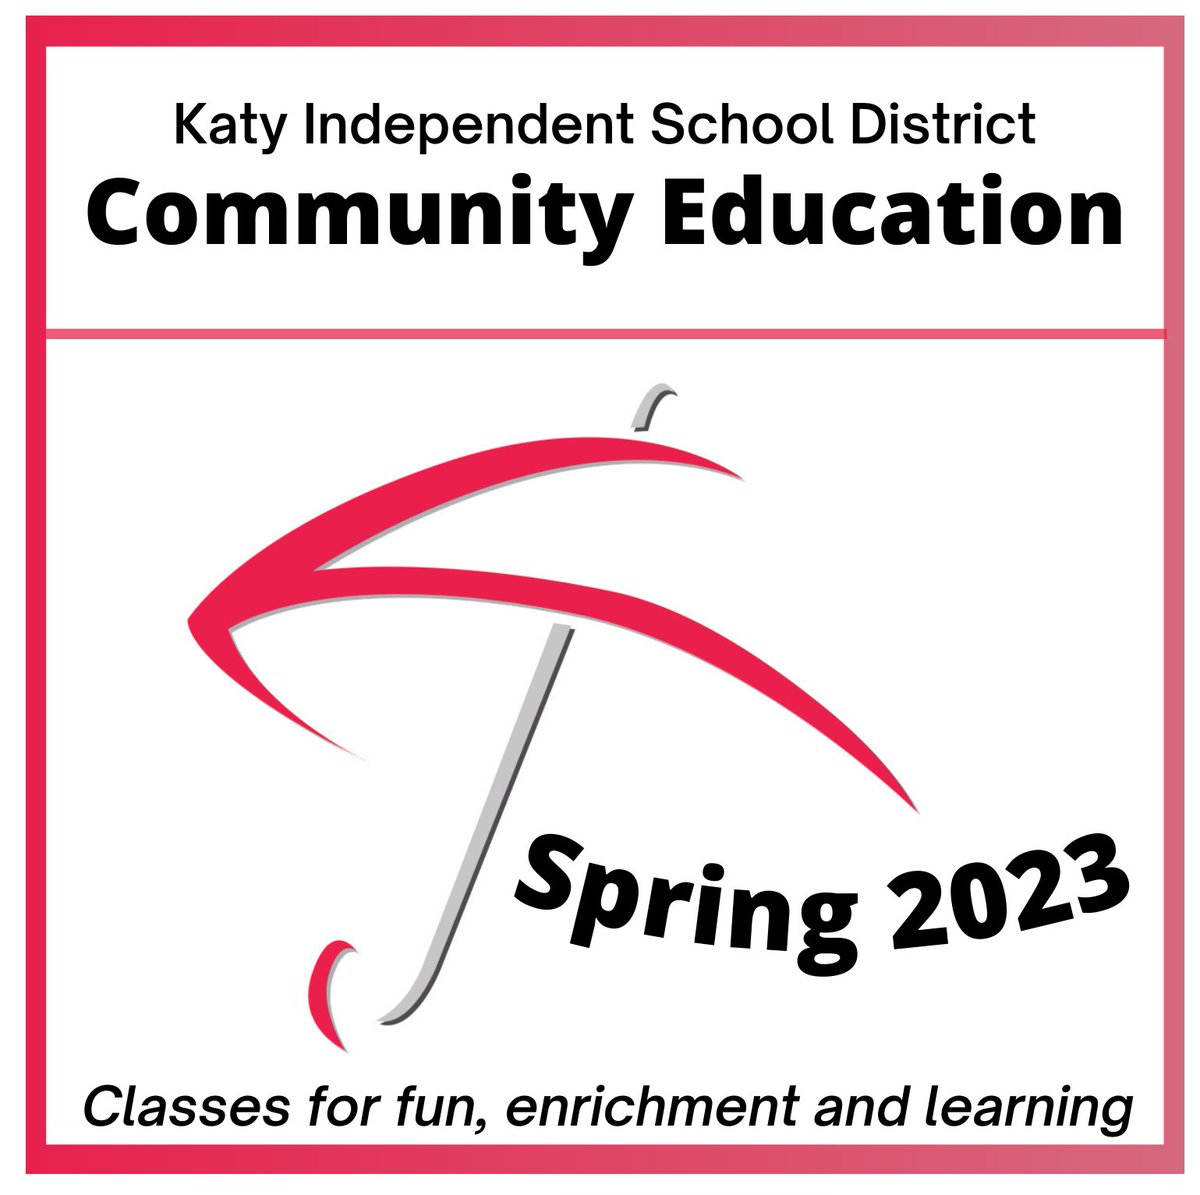 Katy ISD on Twitter "Katy ISD's Spring 2023 Community Education